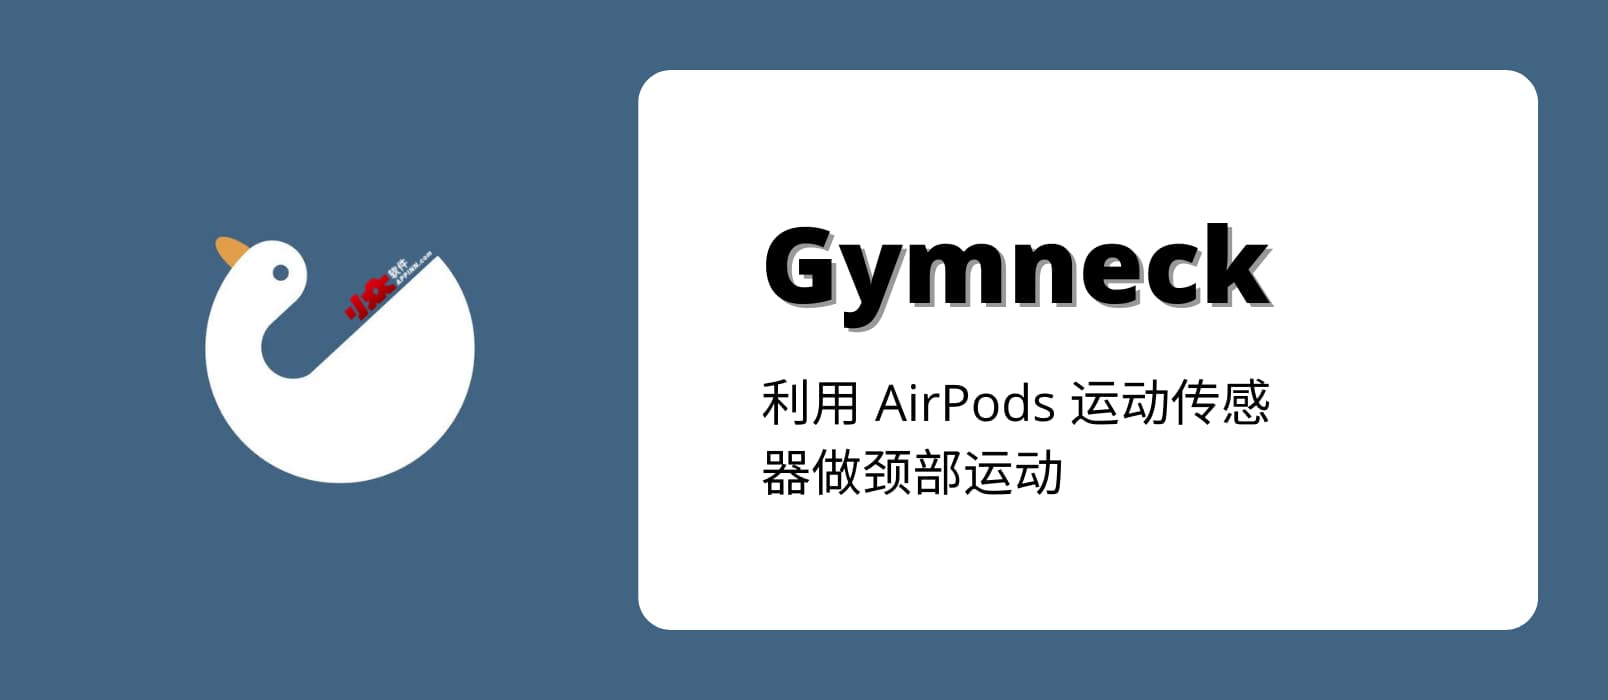 Gymneck - 戴上耳机，扭扭脖子，保护颈椎。利用 AirPods 运动传感器做颈部运动[iPhone]